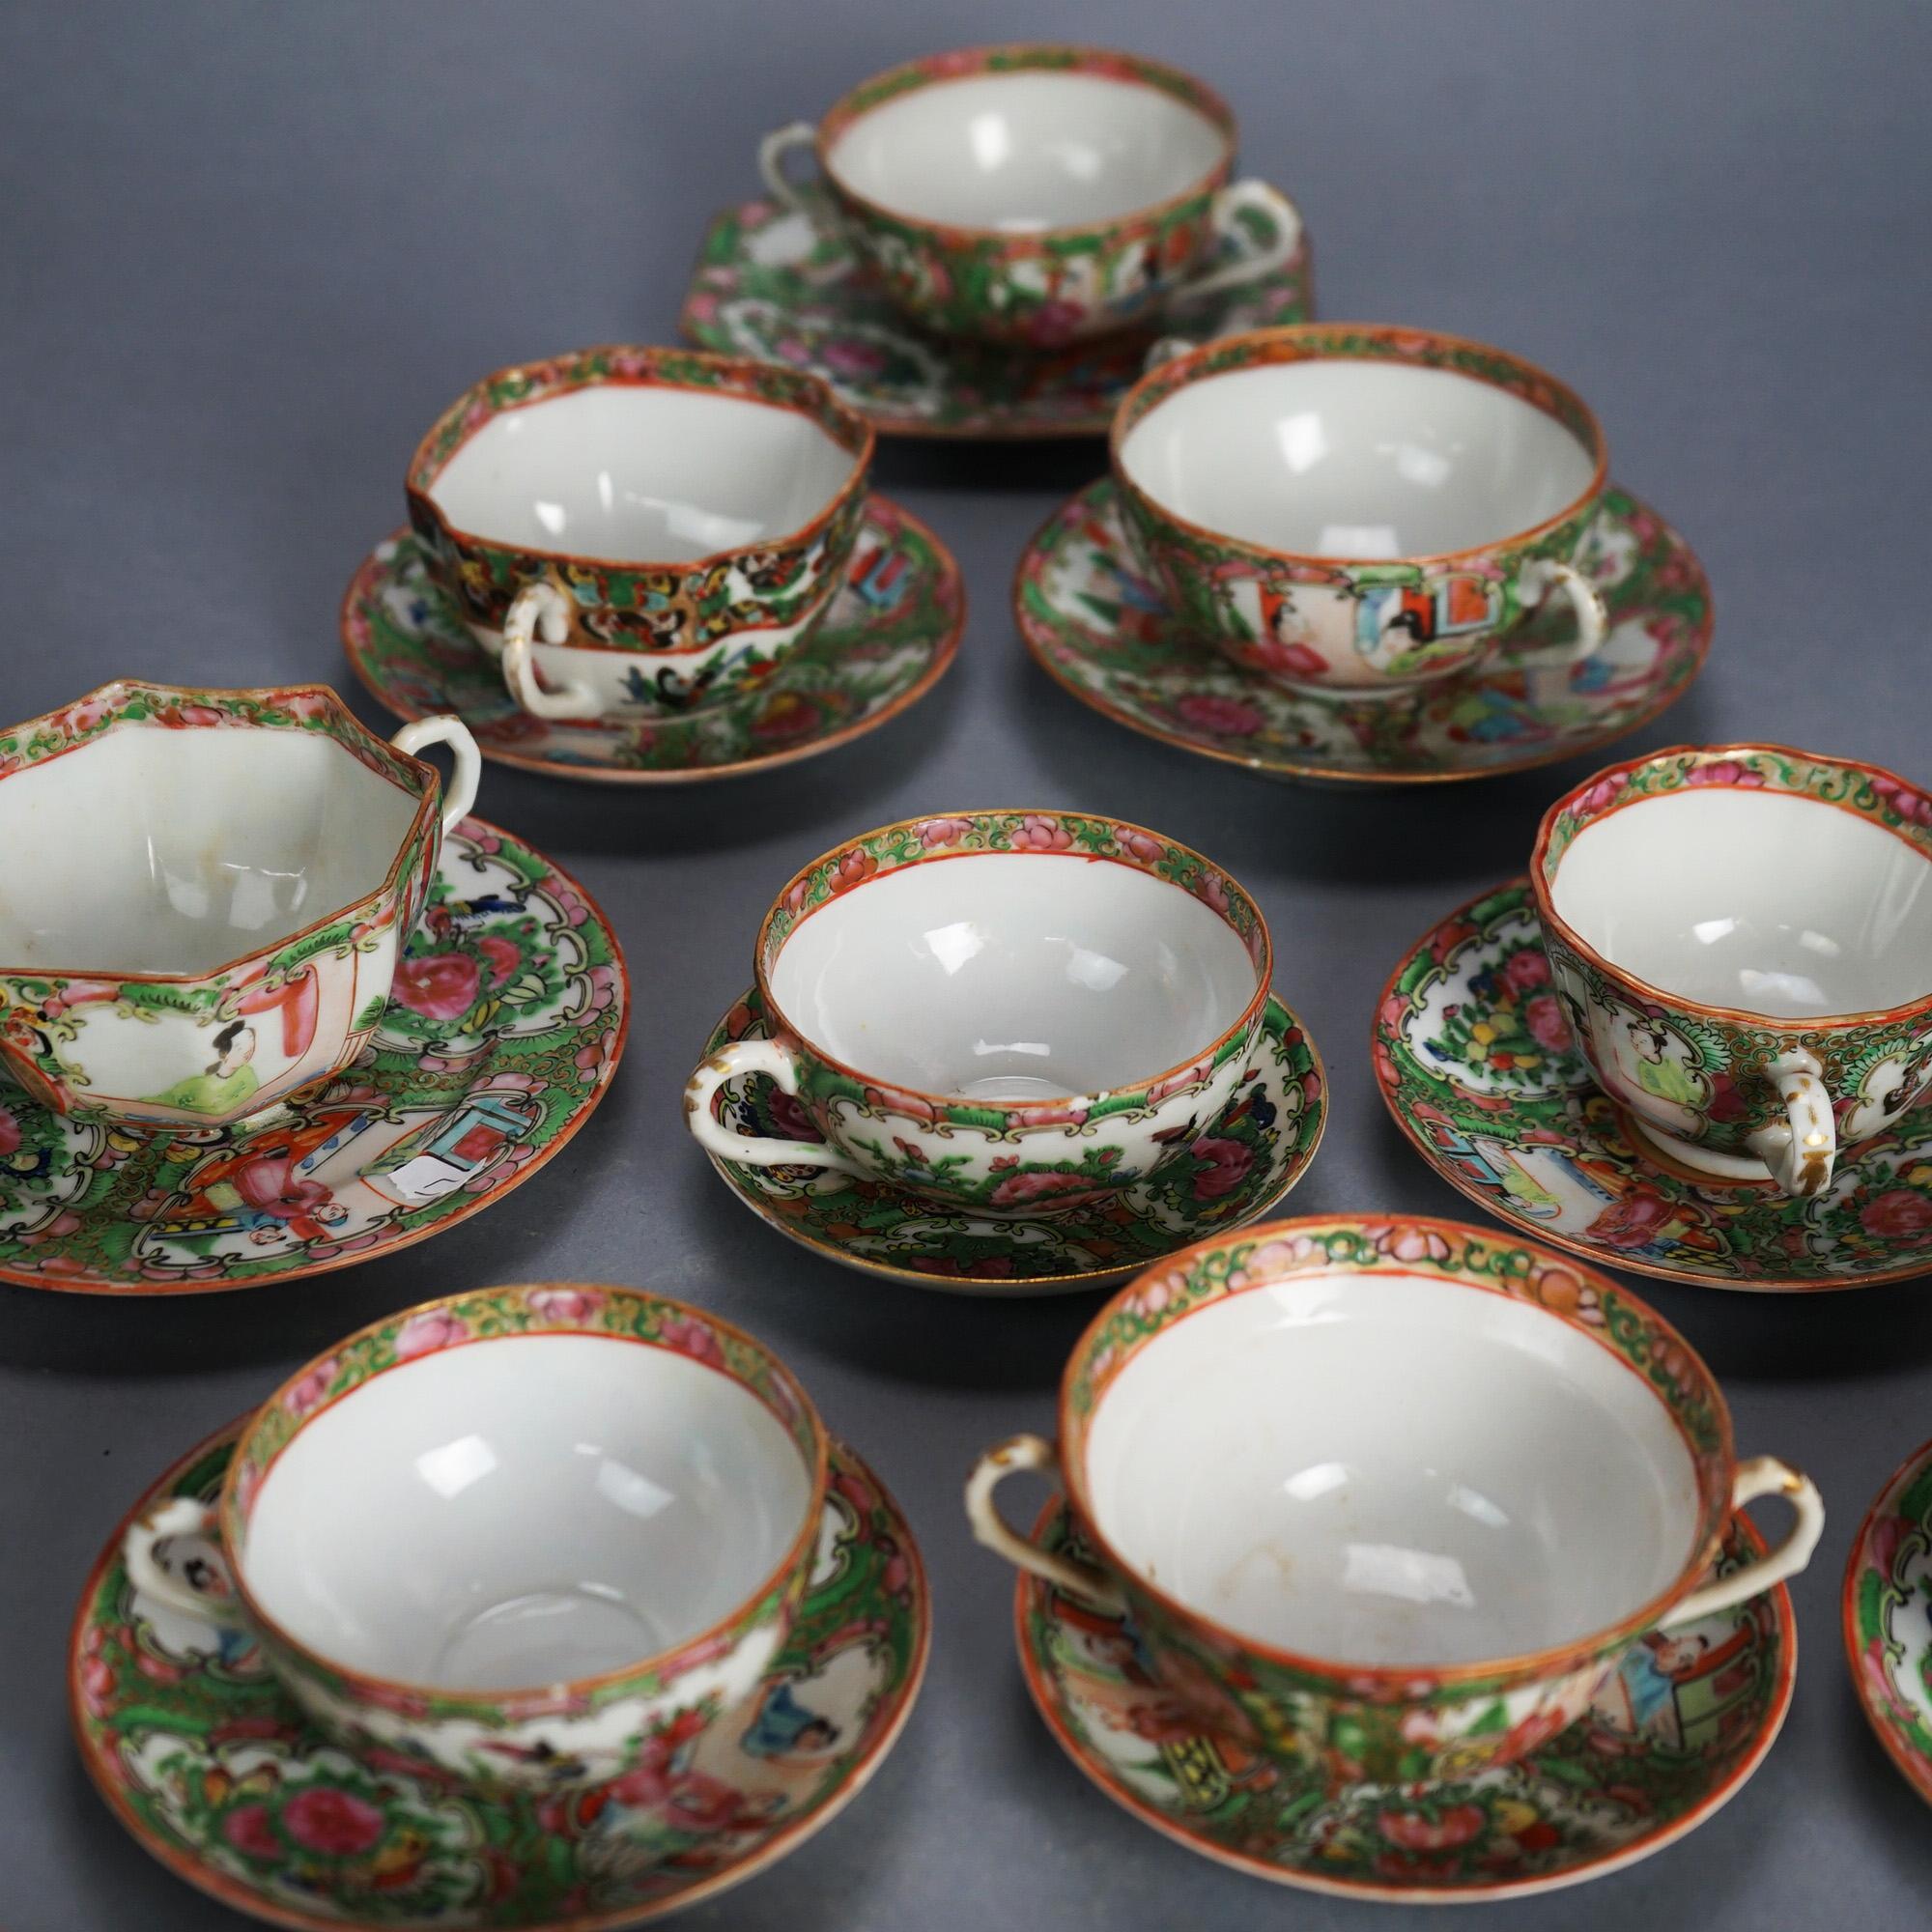 21 Antique Chinese Rose Medallion Porcelain Tea Cups & 20 Saucers C1900 For Sale 1